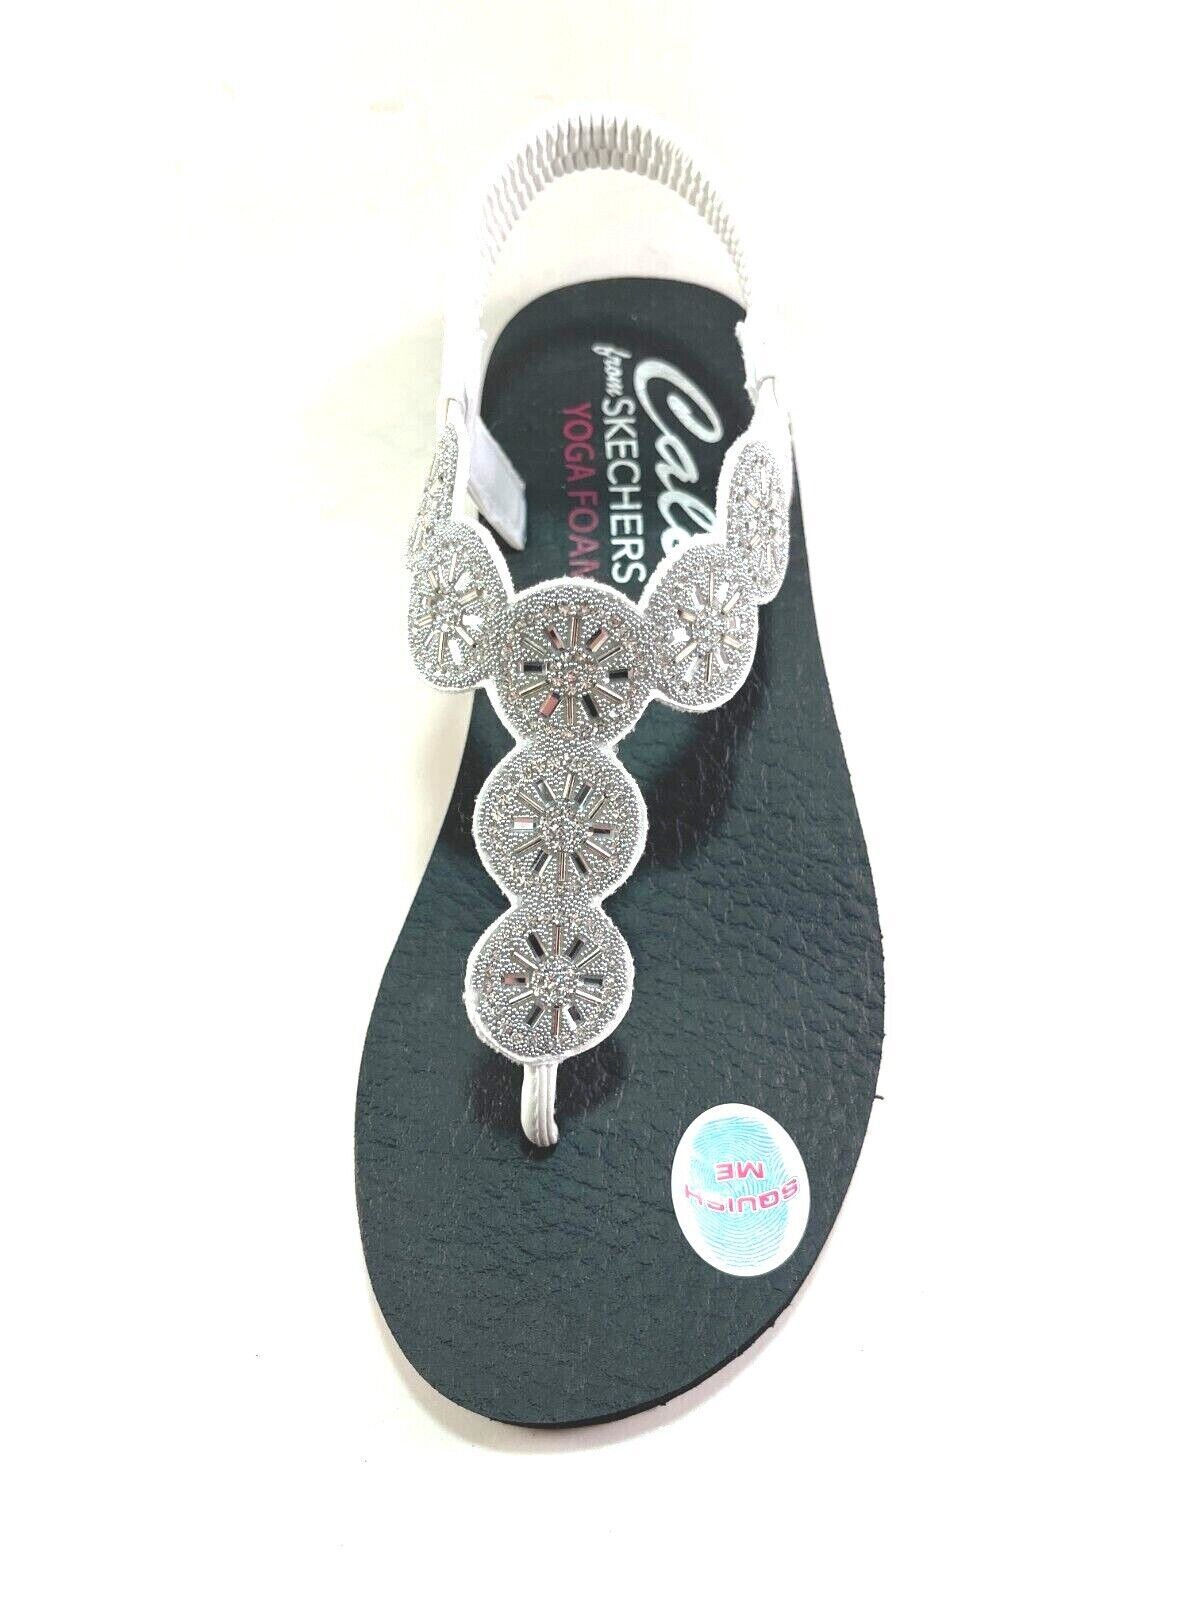 Skechers Yoga Foam Slip-On Thong Flip Flop Rhinestone Sandals Woman’s Size  10 